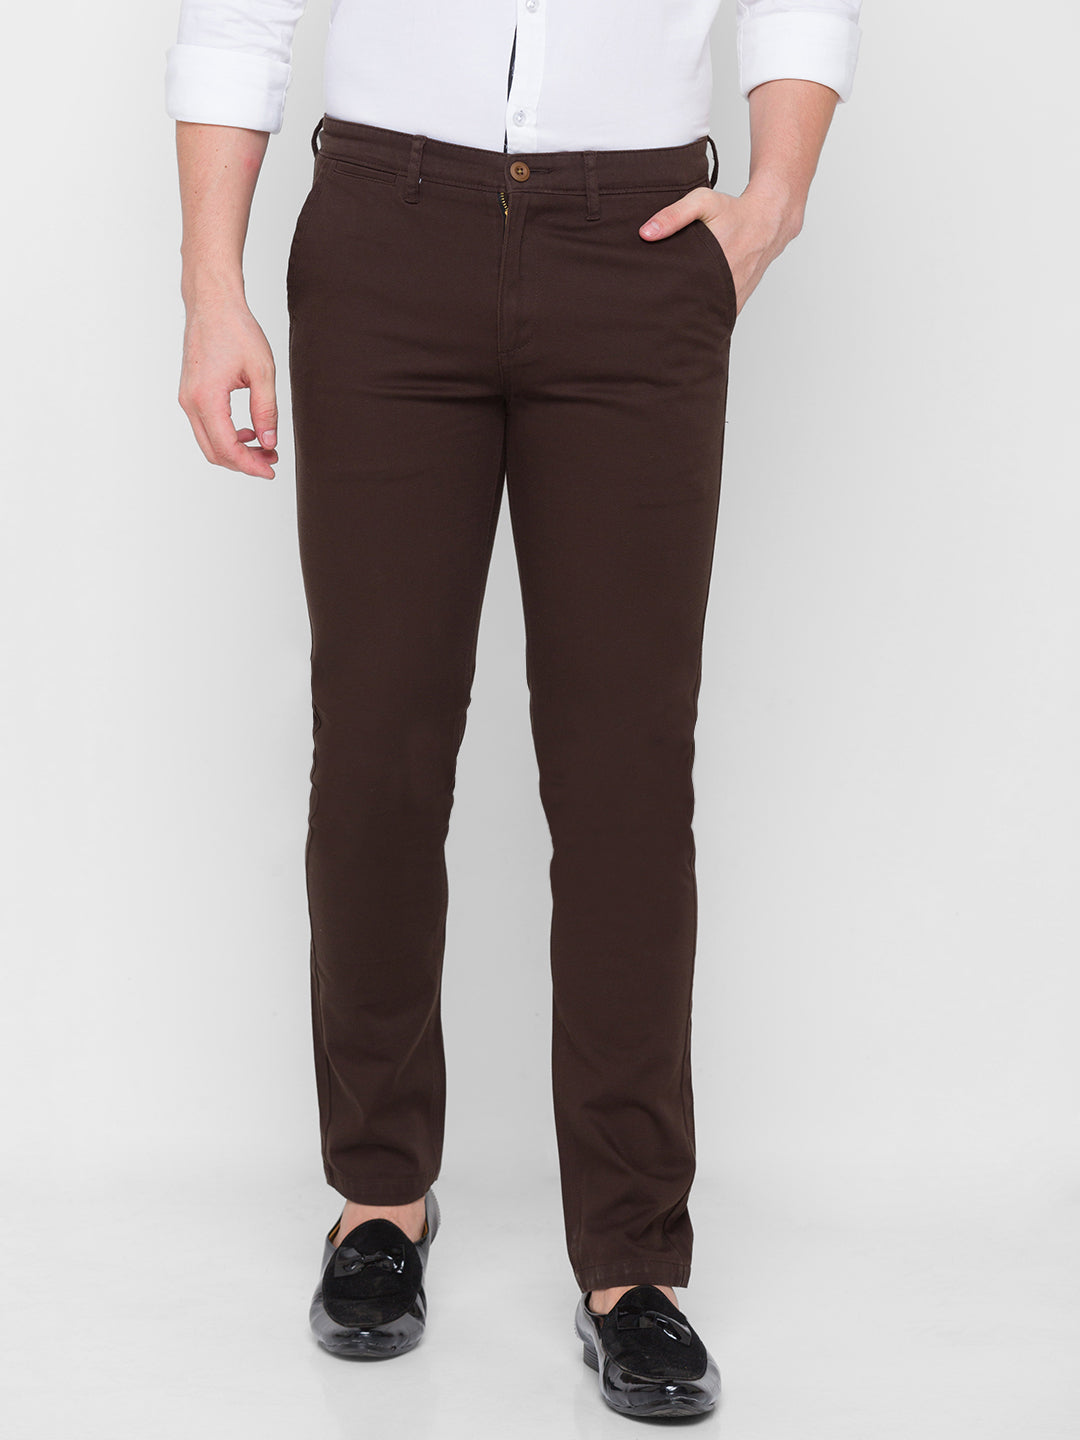 Jeans & Trousers | Branded Spykar Jeans Size Medium 28 | Freeup